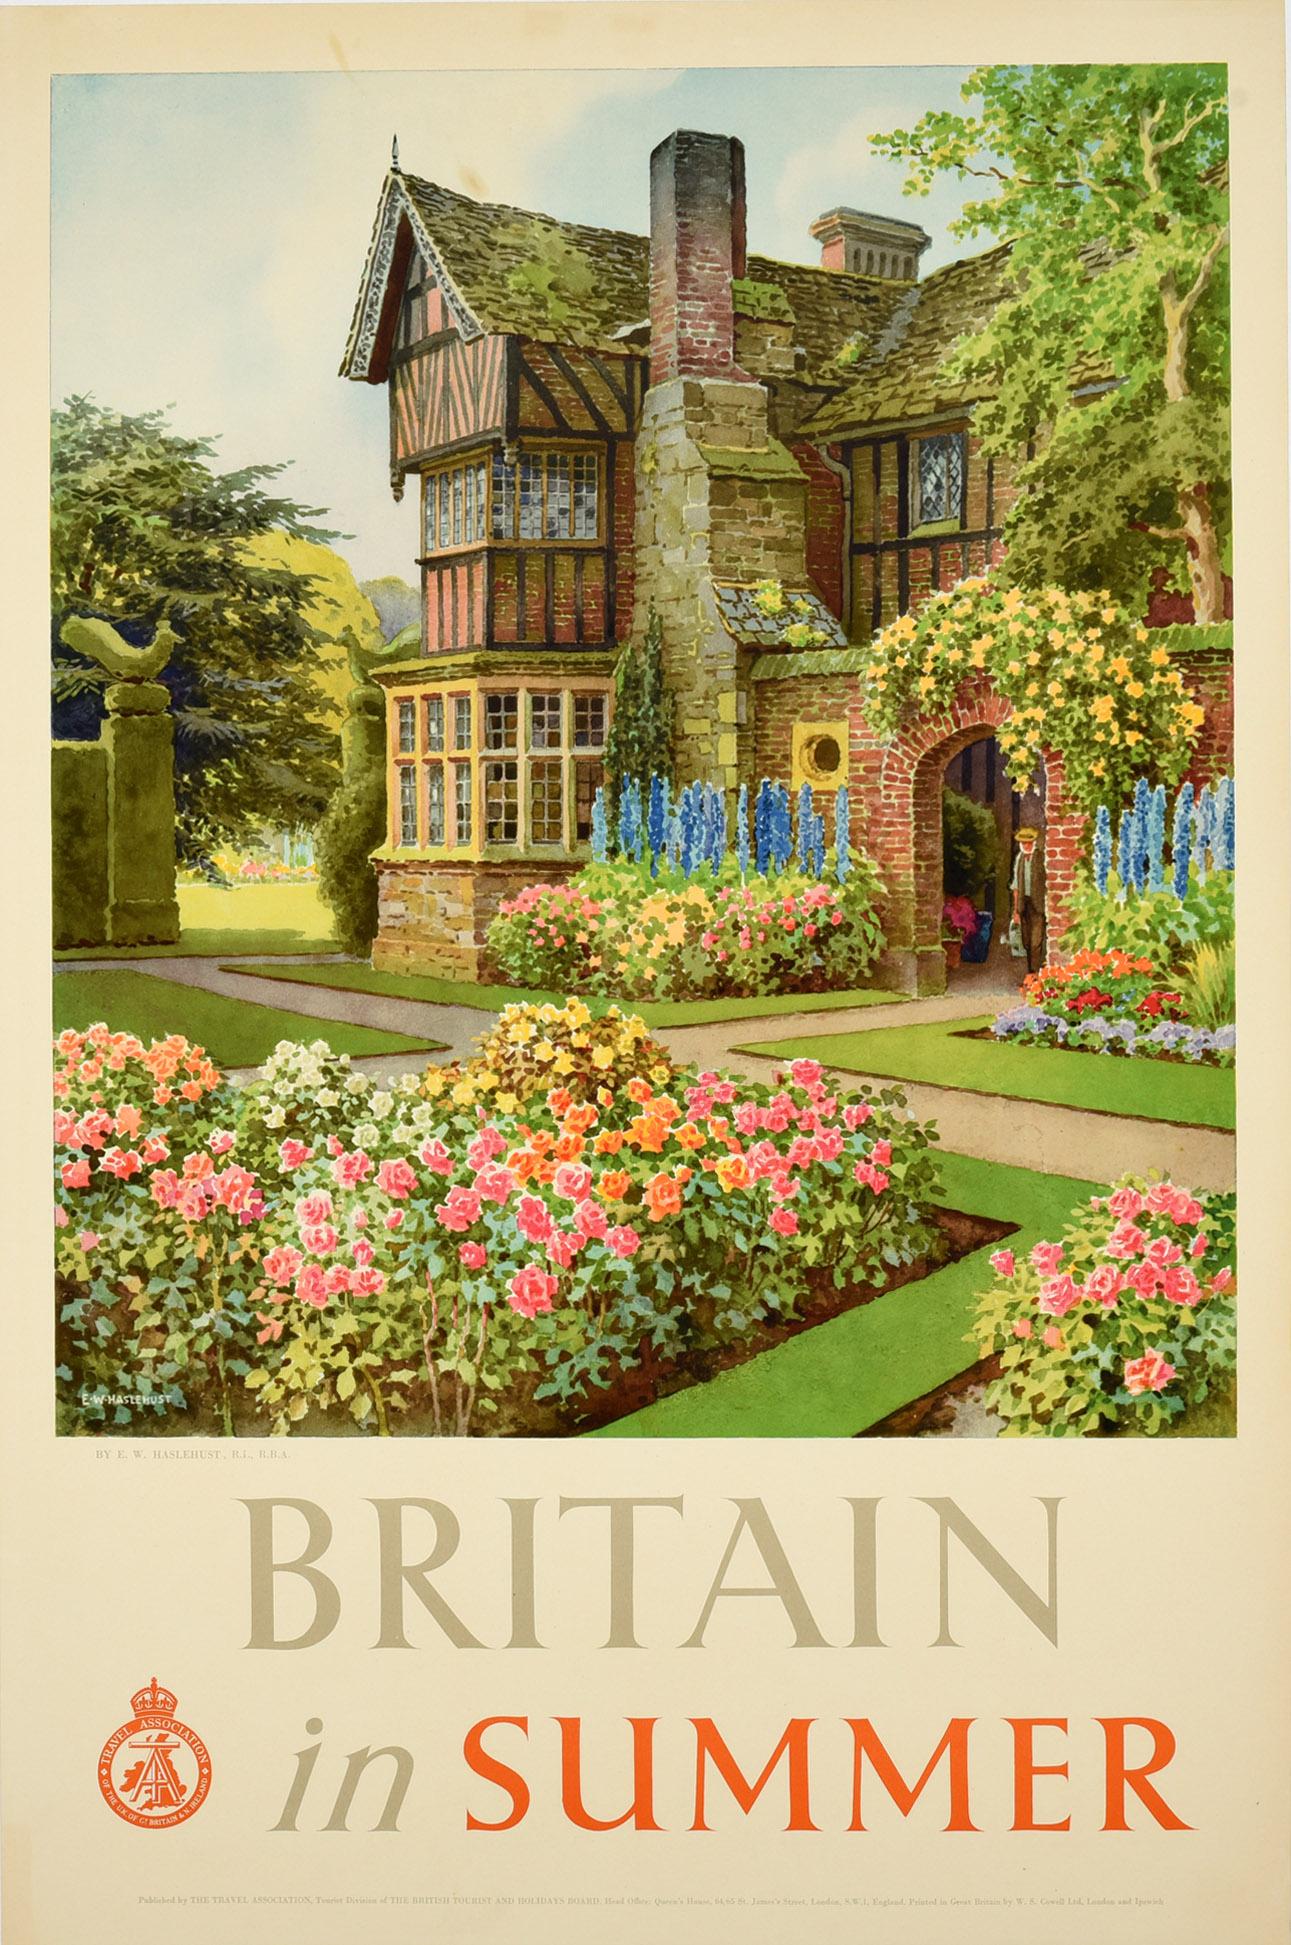 Ernest W. Haslehust Print - Original Vintage Poster Britain In Summer Travel Country House Landscape Gardens